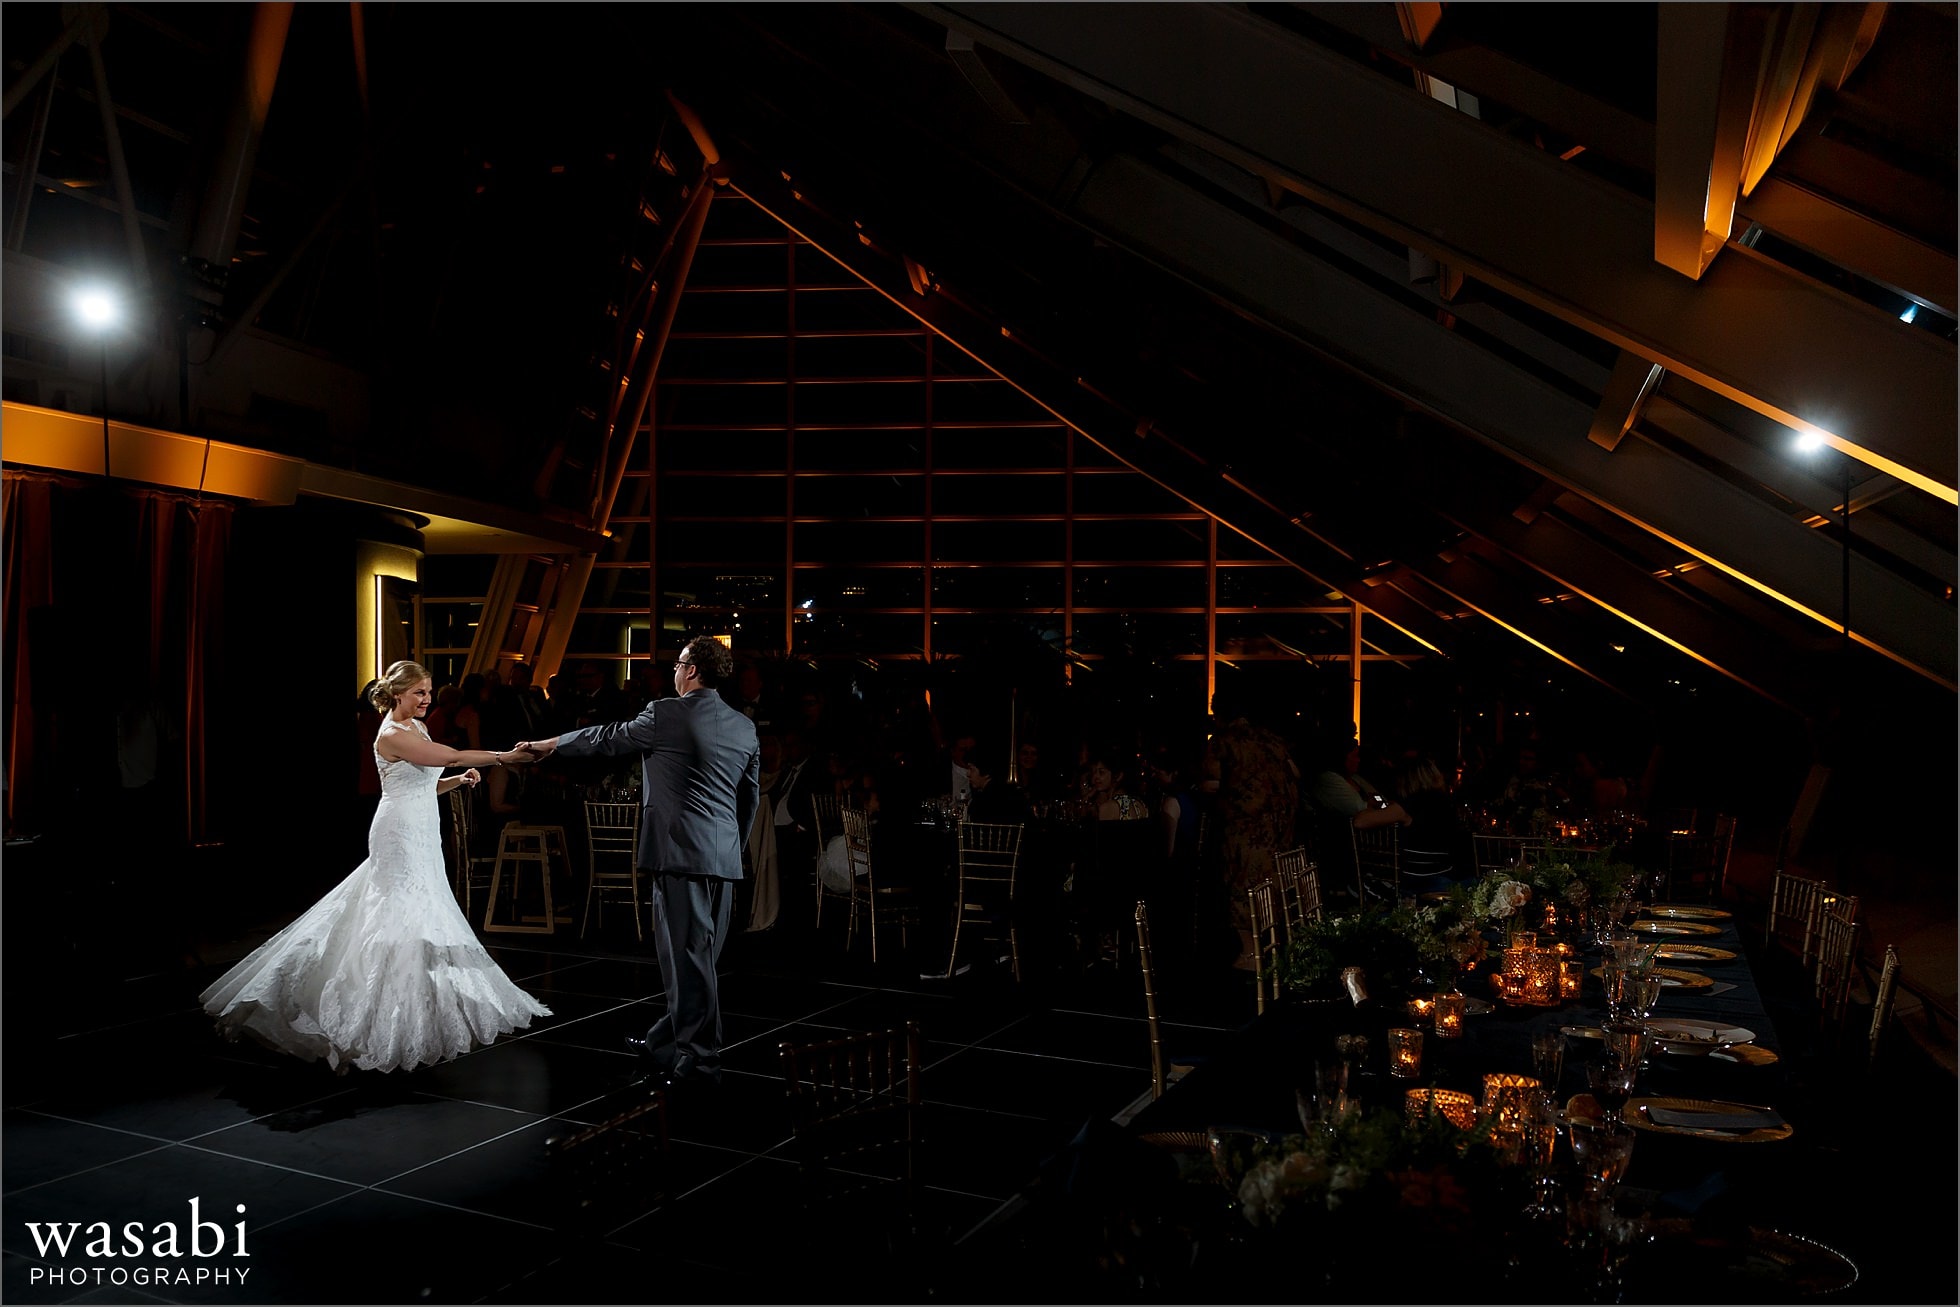 adler planetarium wedding reception dancing photos